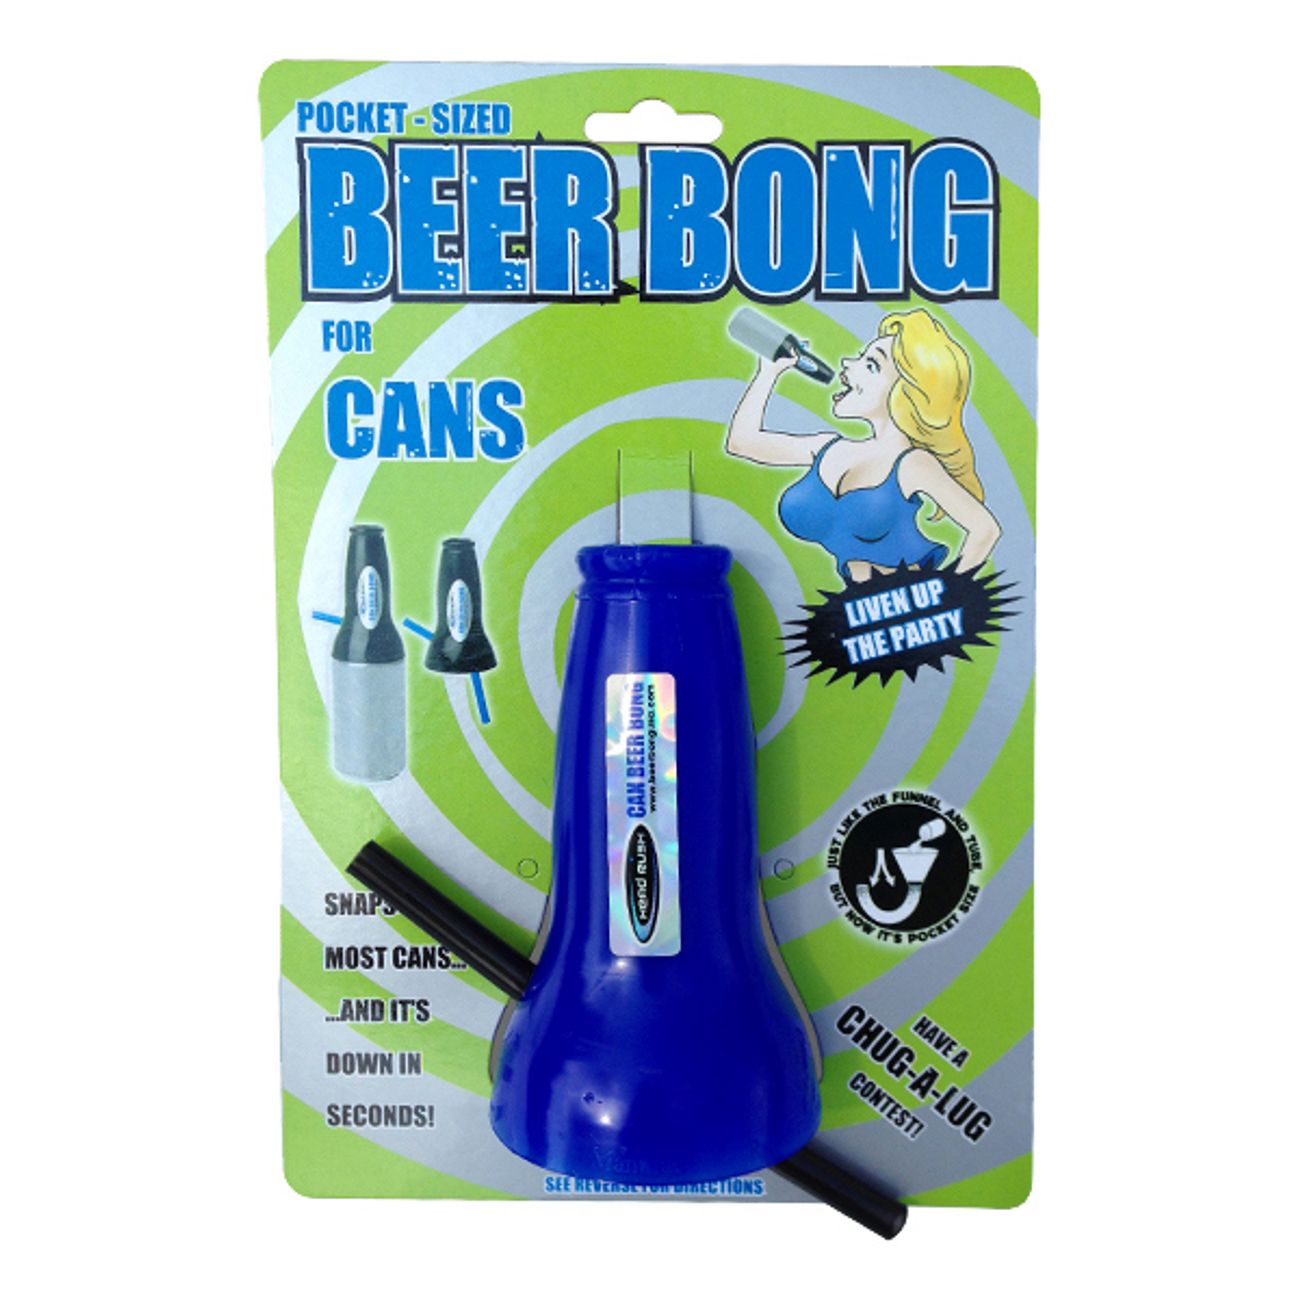 beer-bong-for-flaska-1